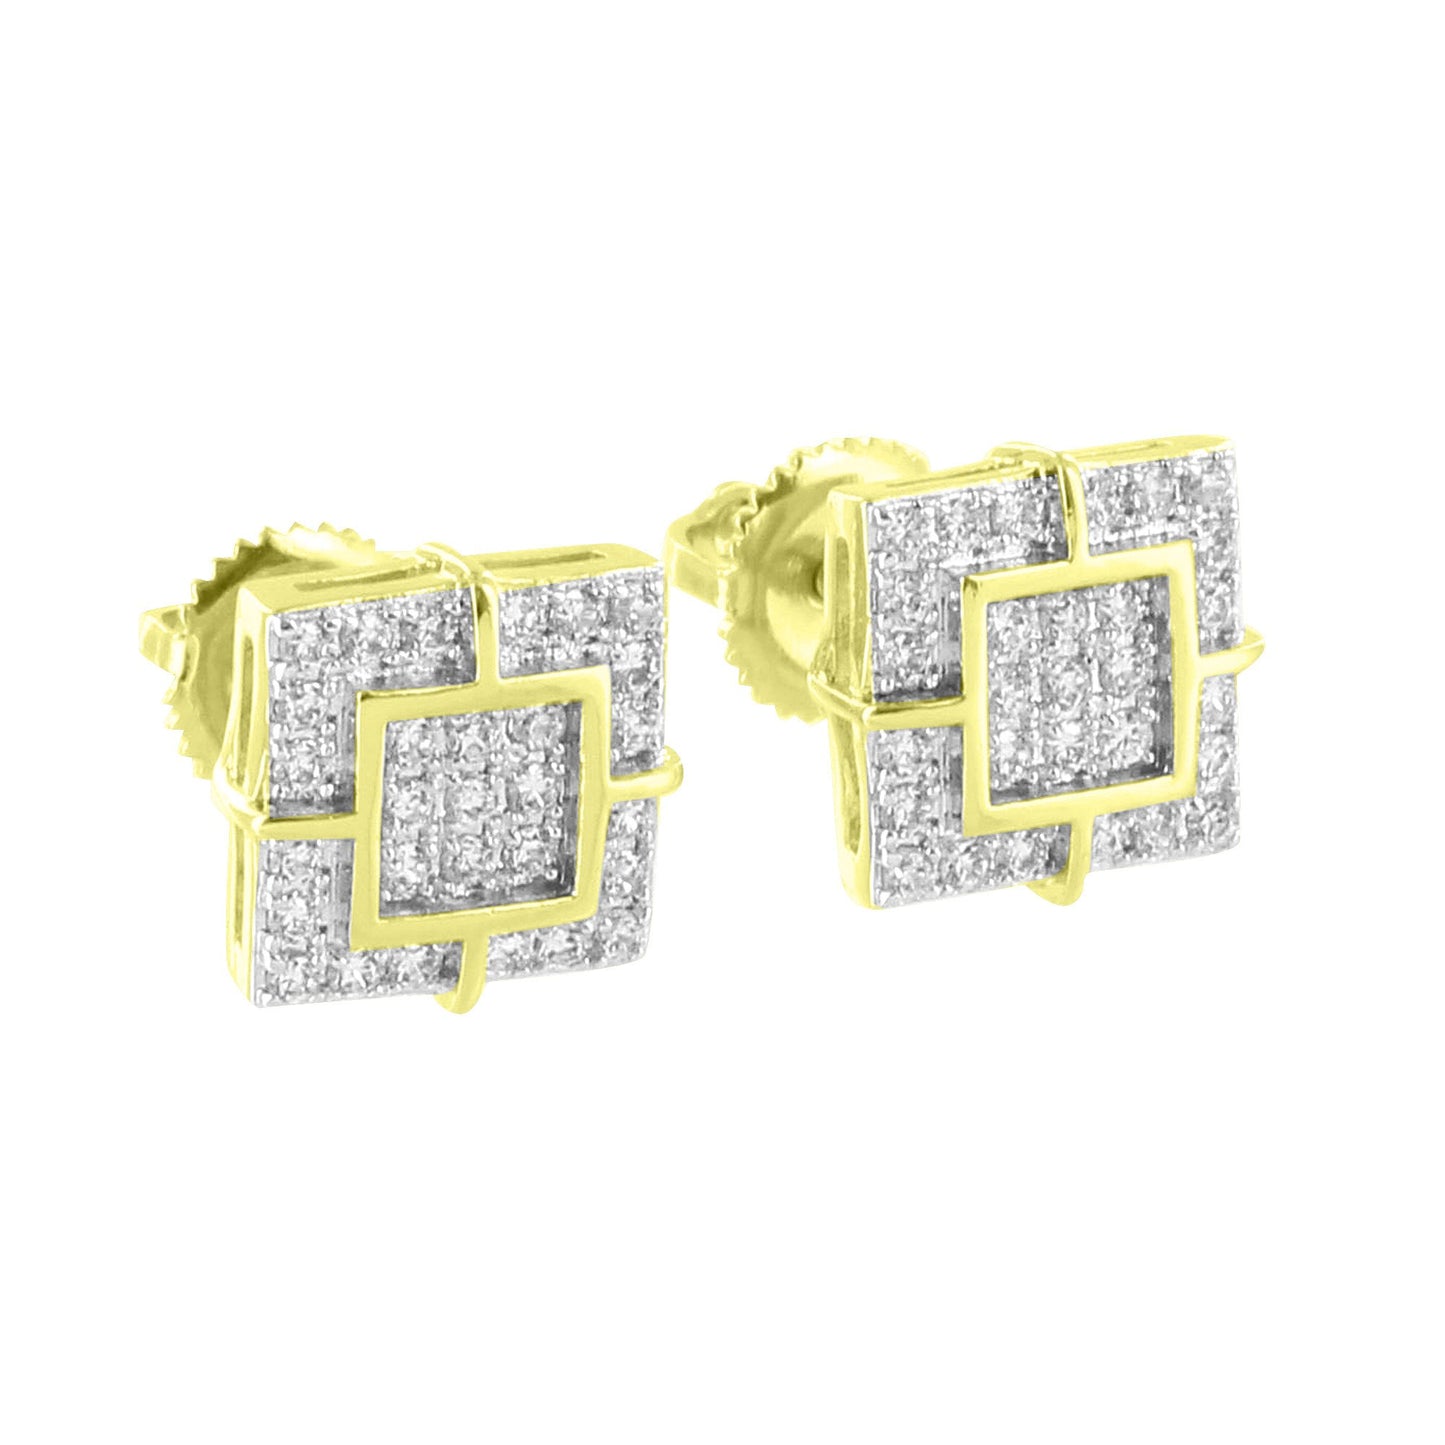 Square Designer Earrings 14K Yellow Gold Finish Bling Simulated Diamonds Screw Back